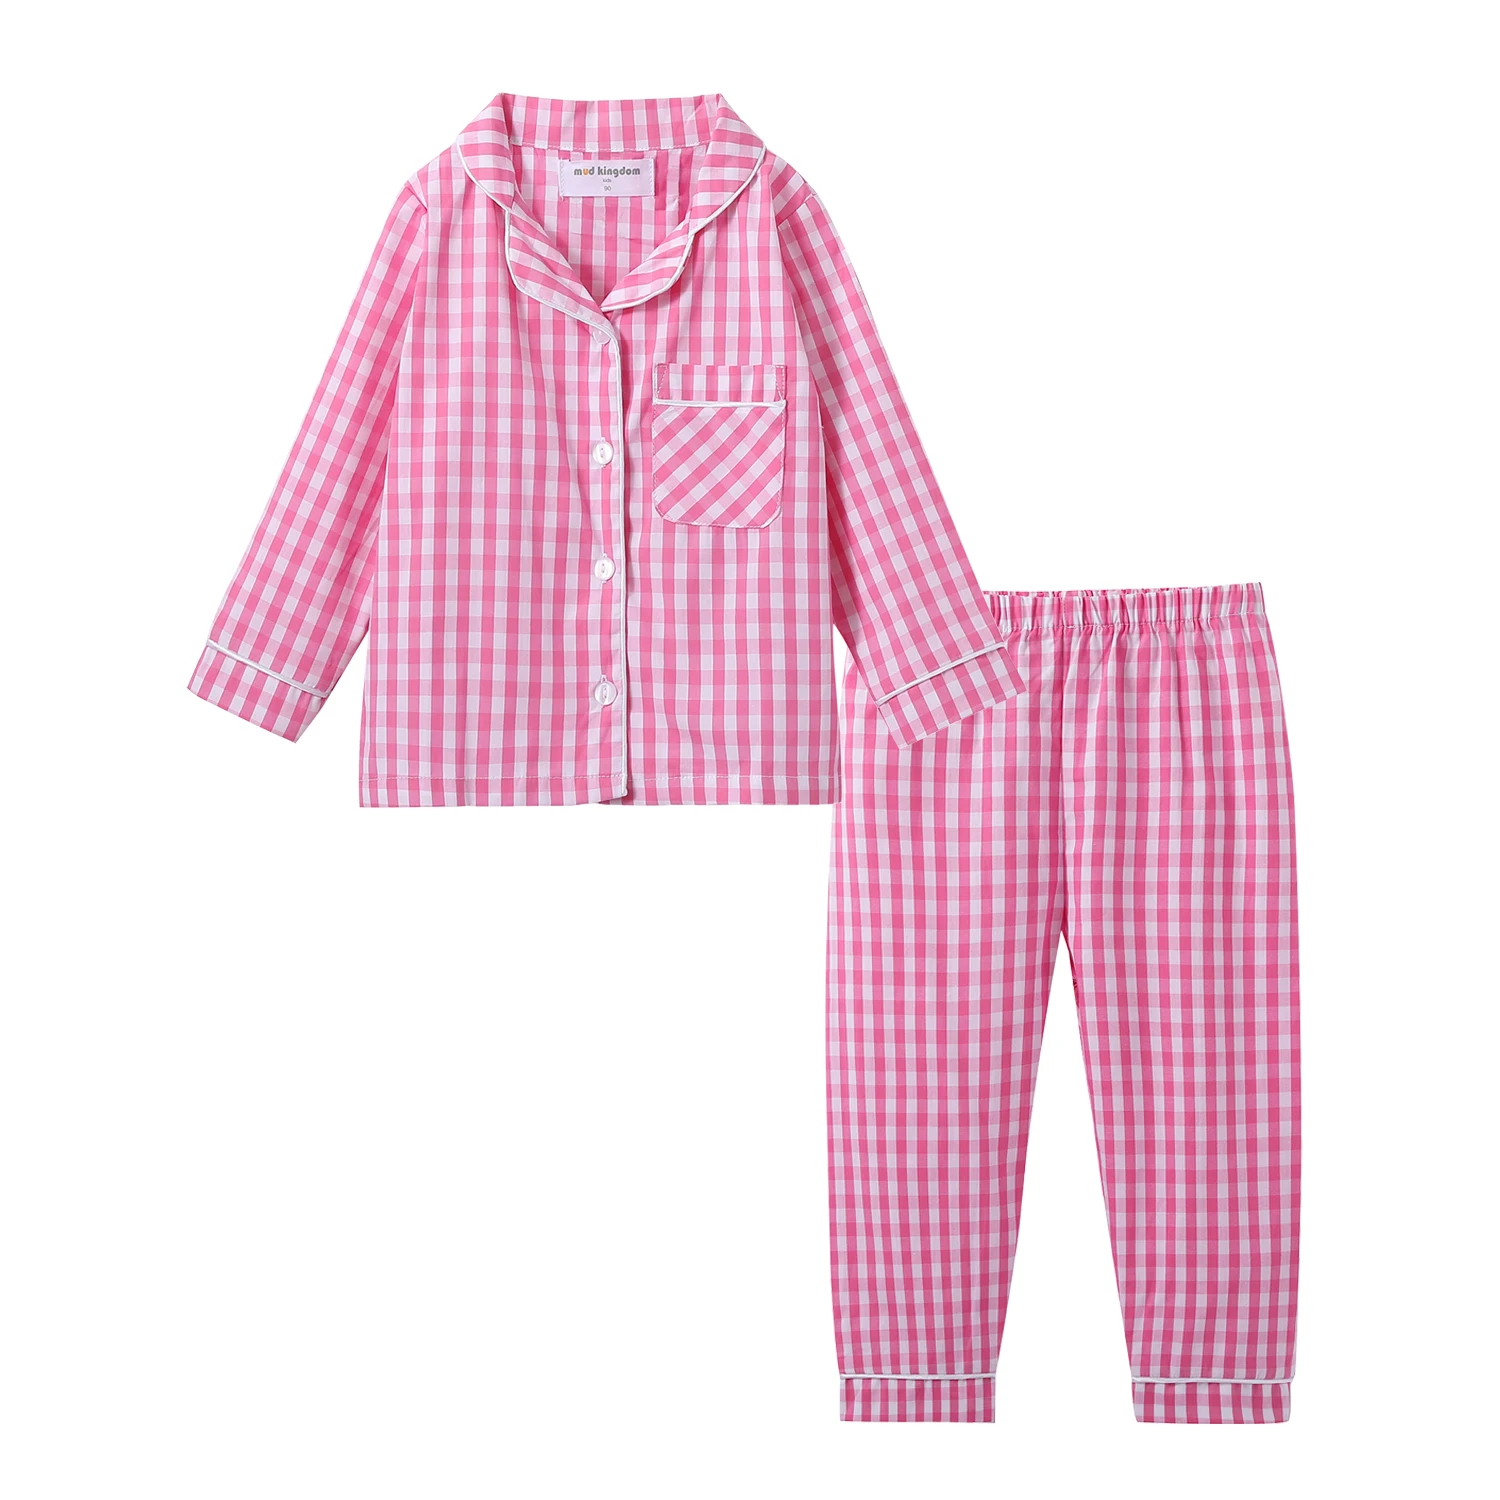 Mud Kingdom Boutique Girls Boys Pajamas Set Collared Long Sleeve Sleepwear 